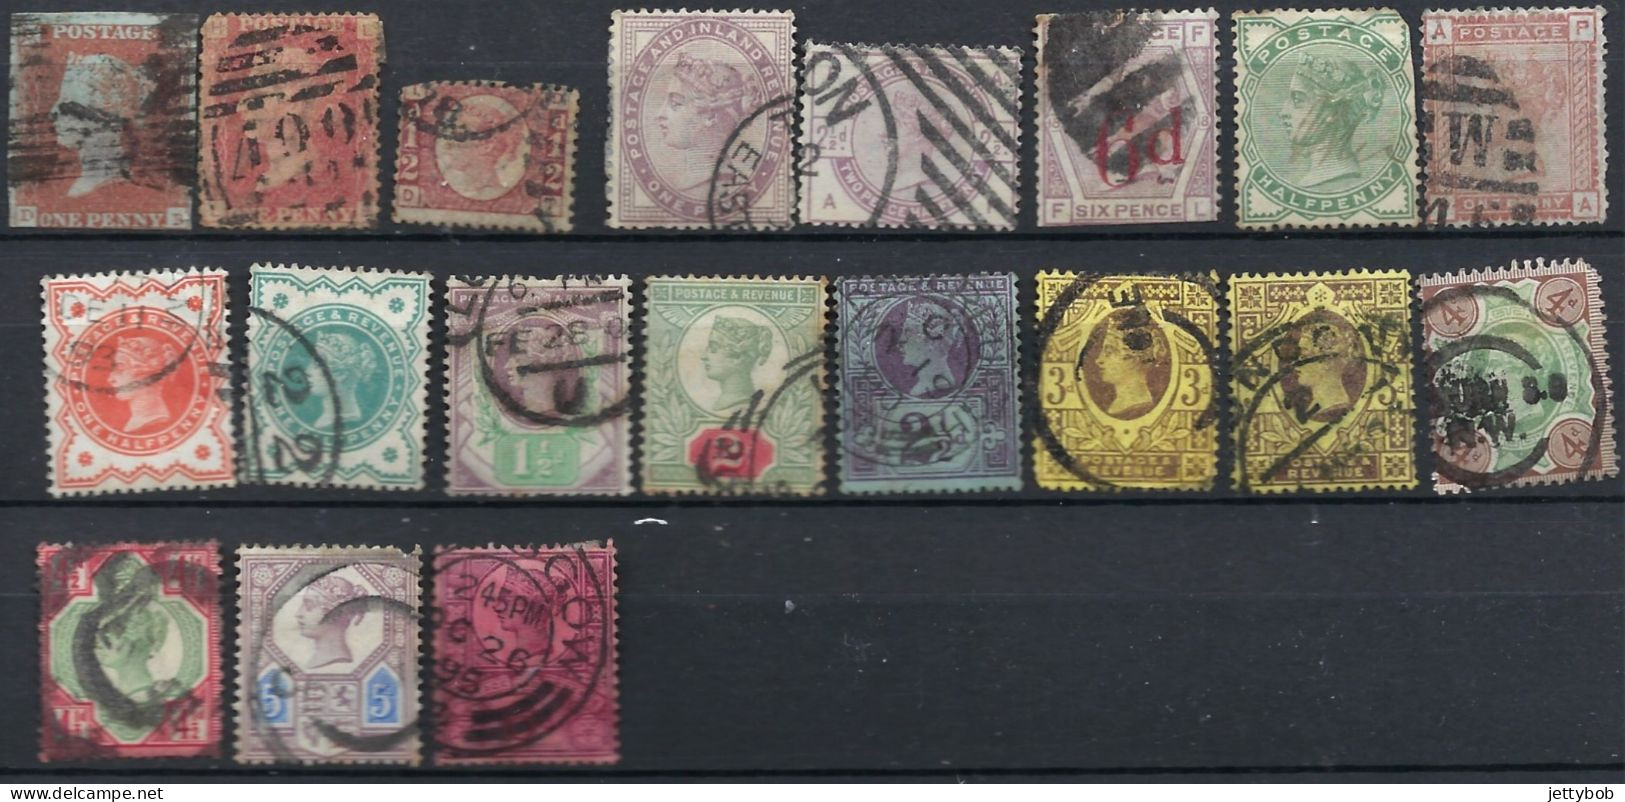 GB Small Collection Of QV Used - Collezioni